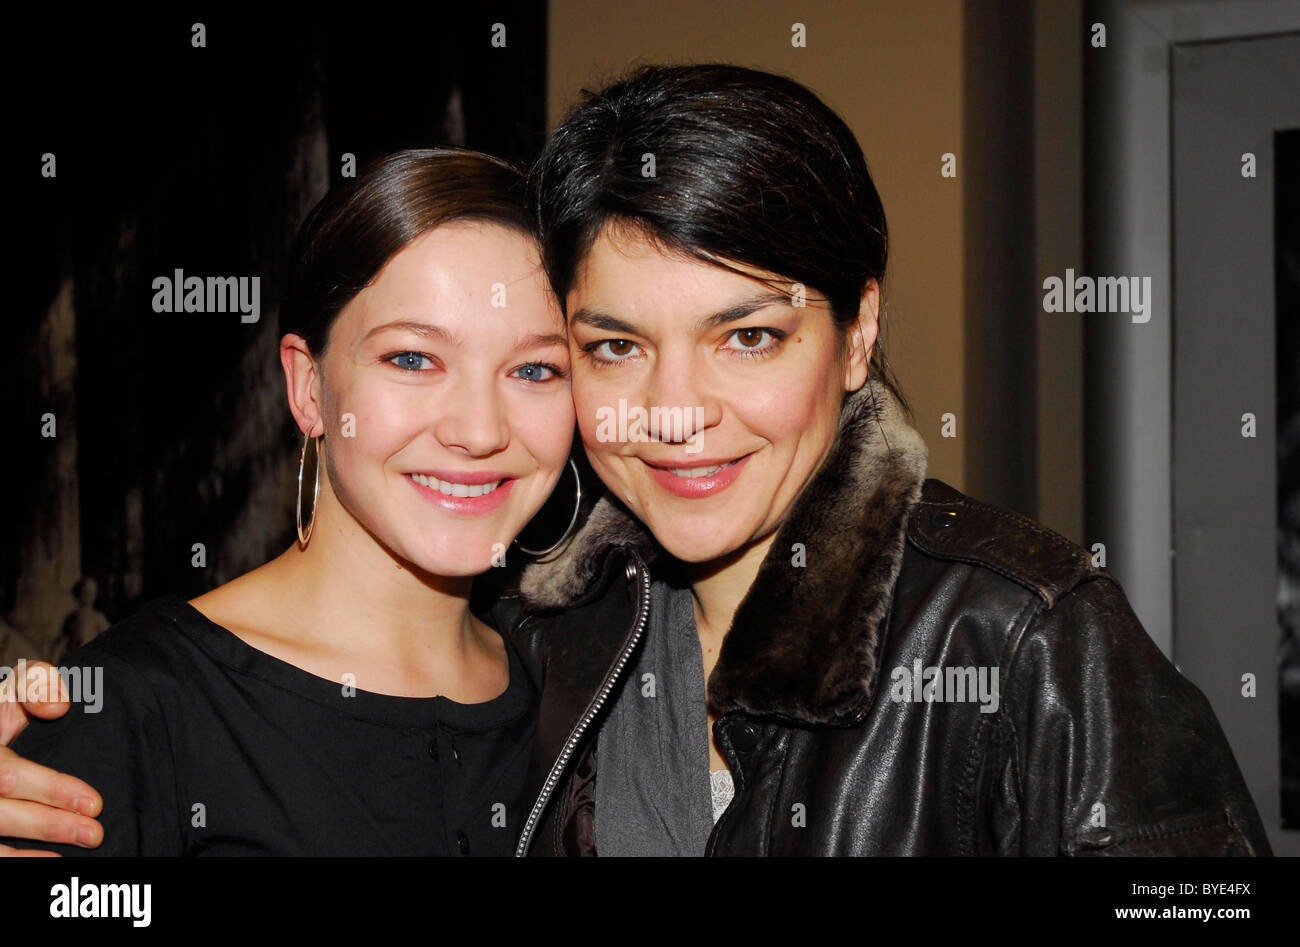 Hannah Herzsprung and Jasmin Tabatabai at the premiere of 'Vier Minuten' at the Kino in der Kulturbrauerei cinema Berlin, Stock Photo